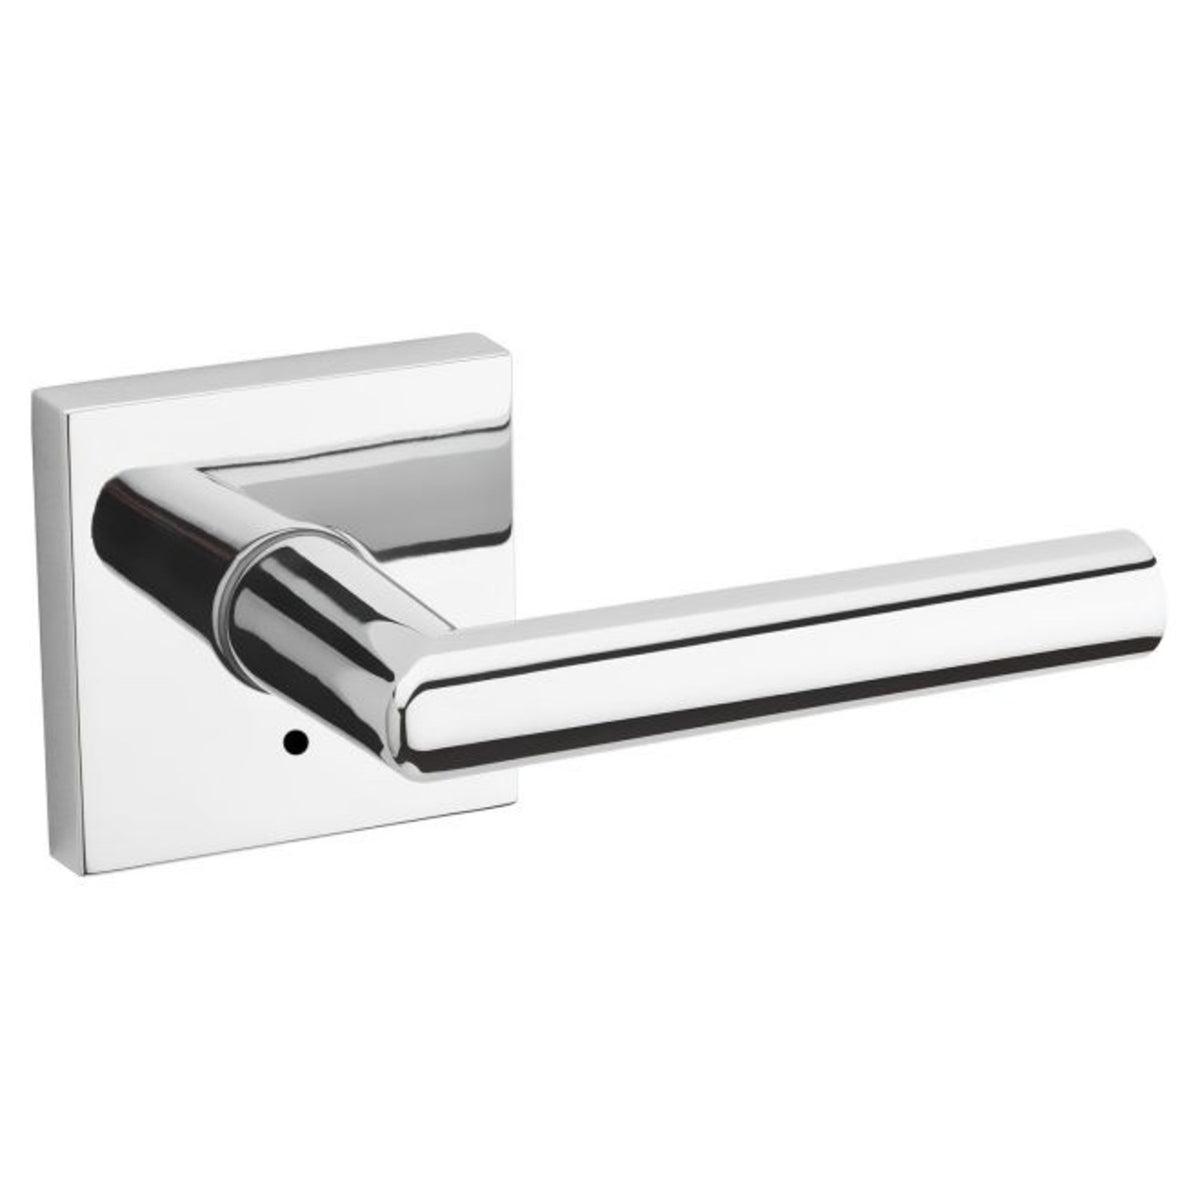 Weiser Lock SPVL331MILSQT26 Milan With Square Rose Privacy Door Lock, Bright Chrome